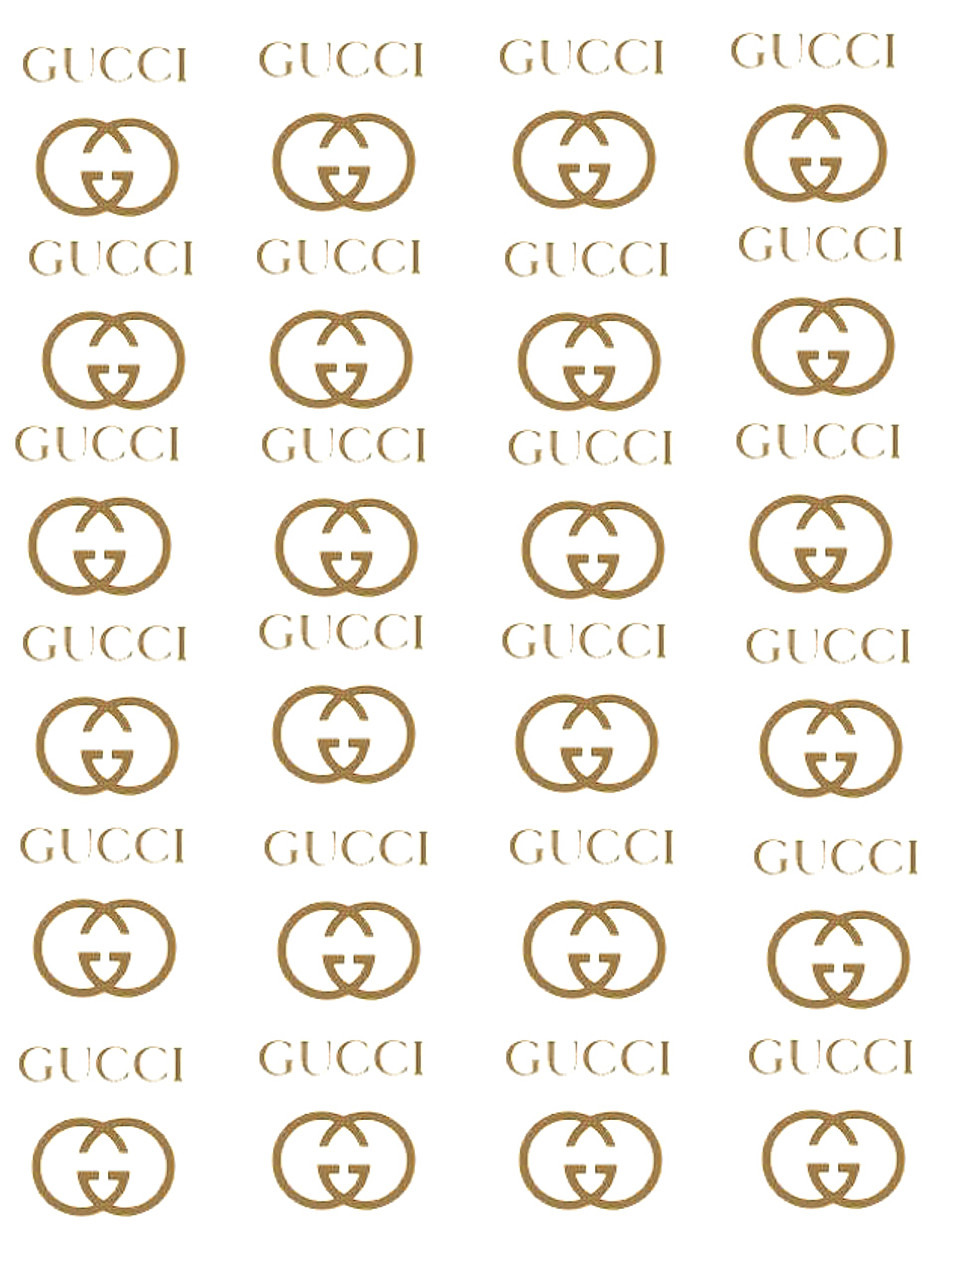 Gucci 壁紙 完全無料画像検索のプリ画像 Bygmo